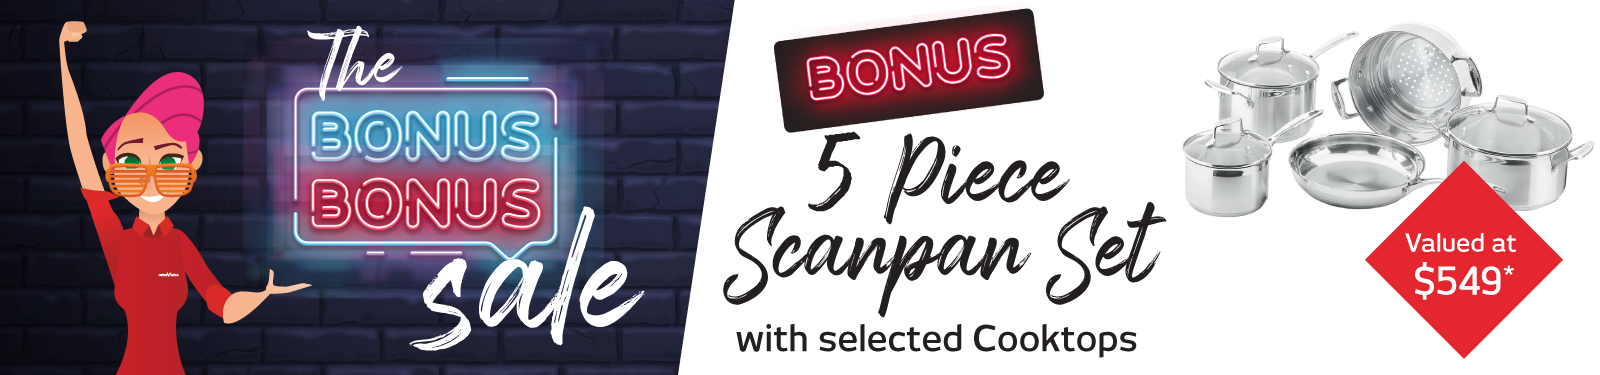 Bonus 5 Piece Scanpan Set at Retravision